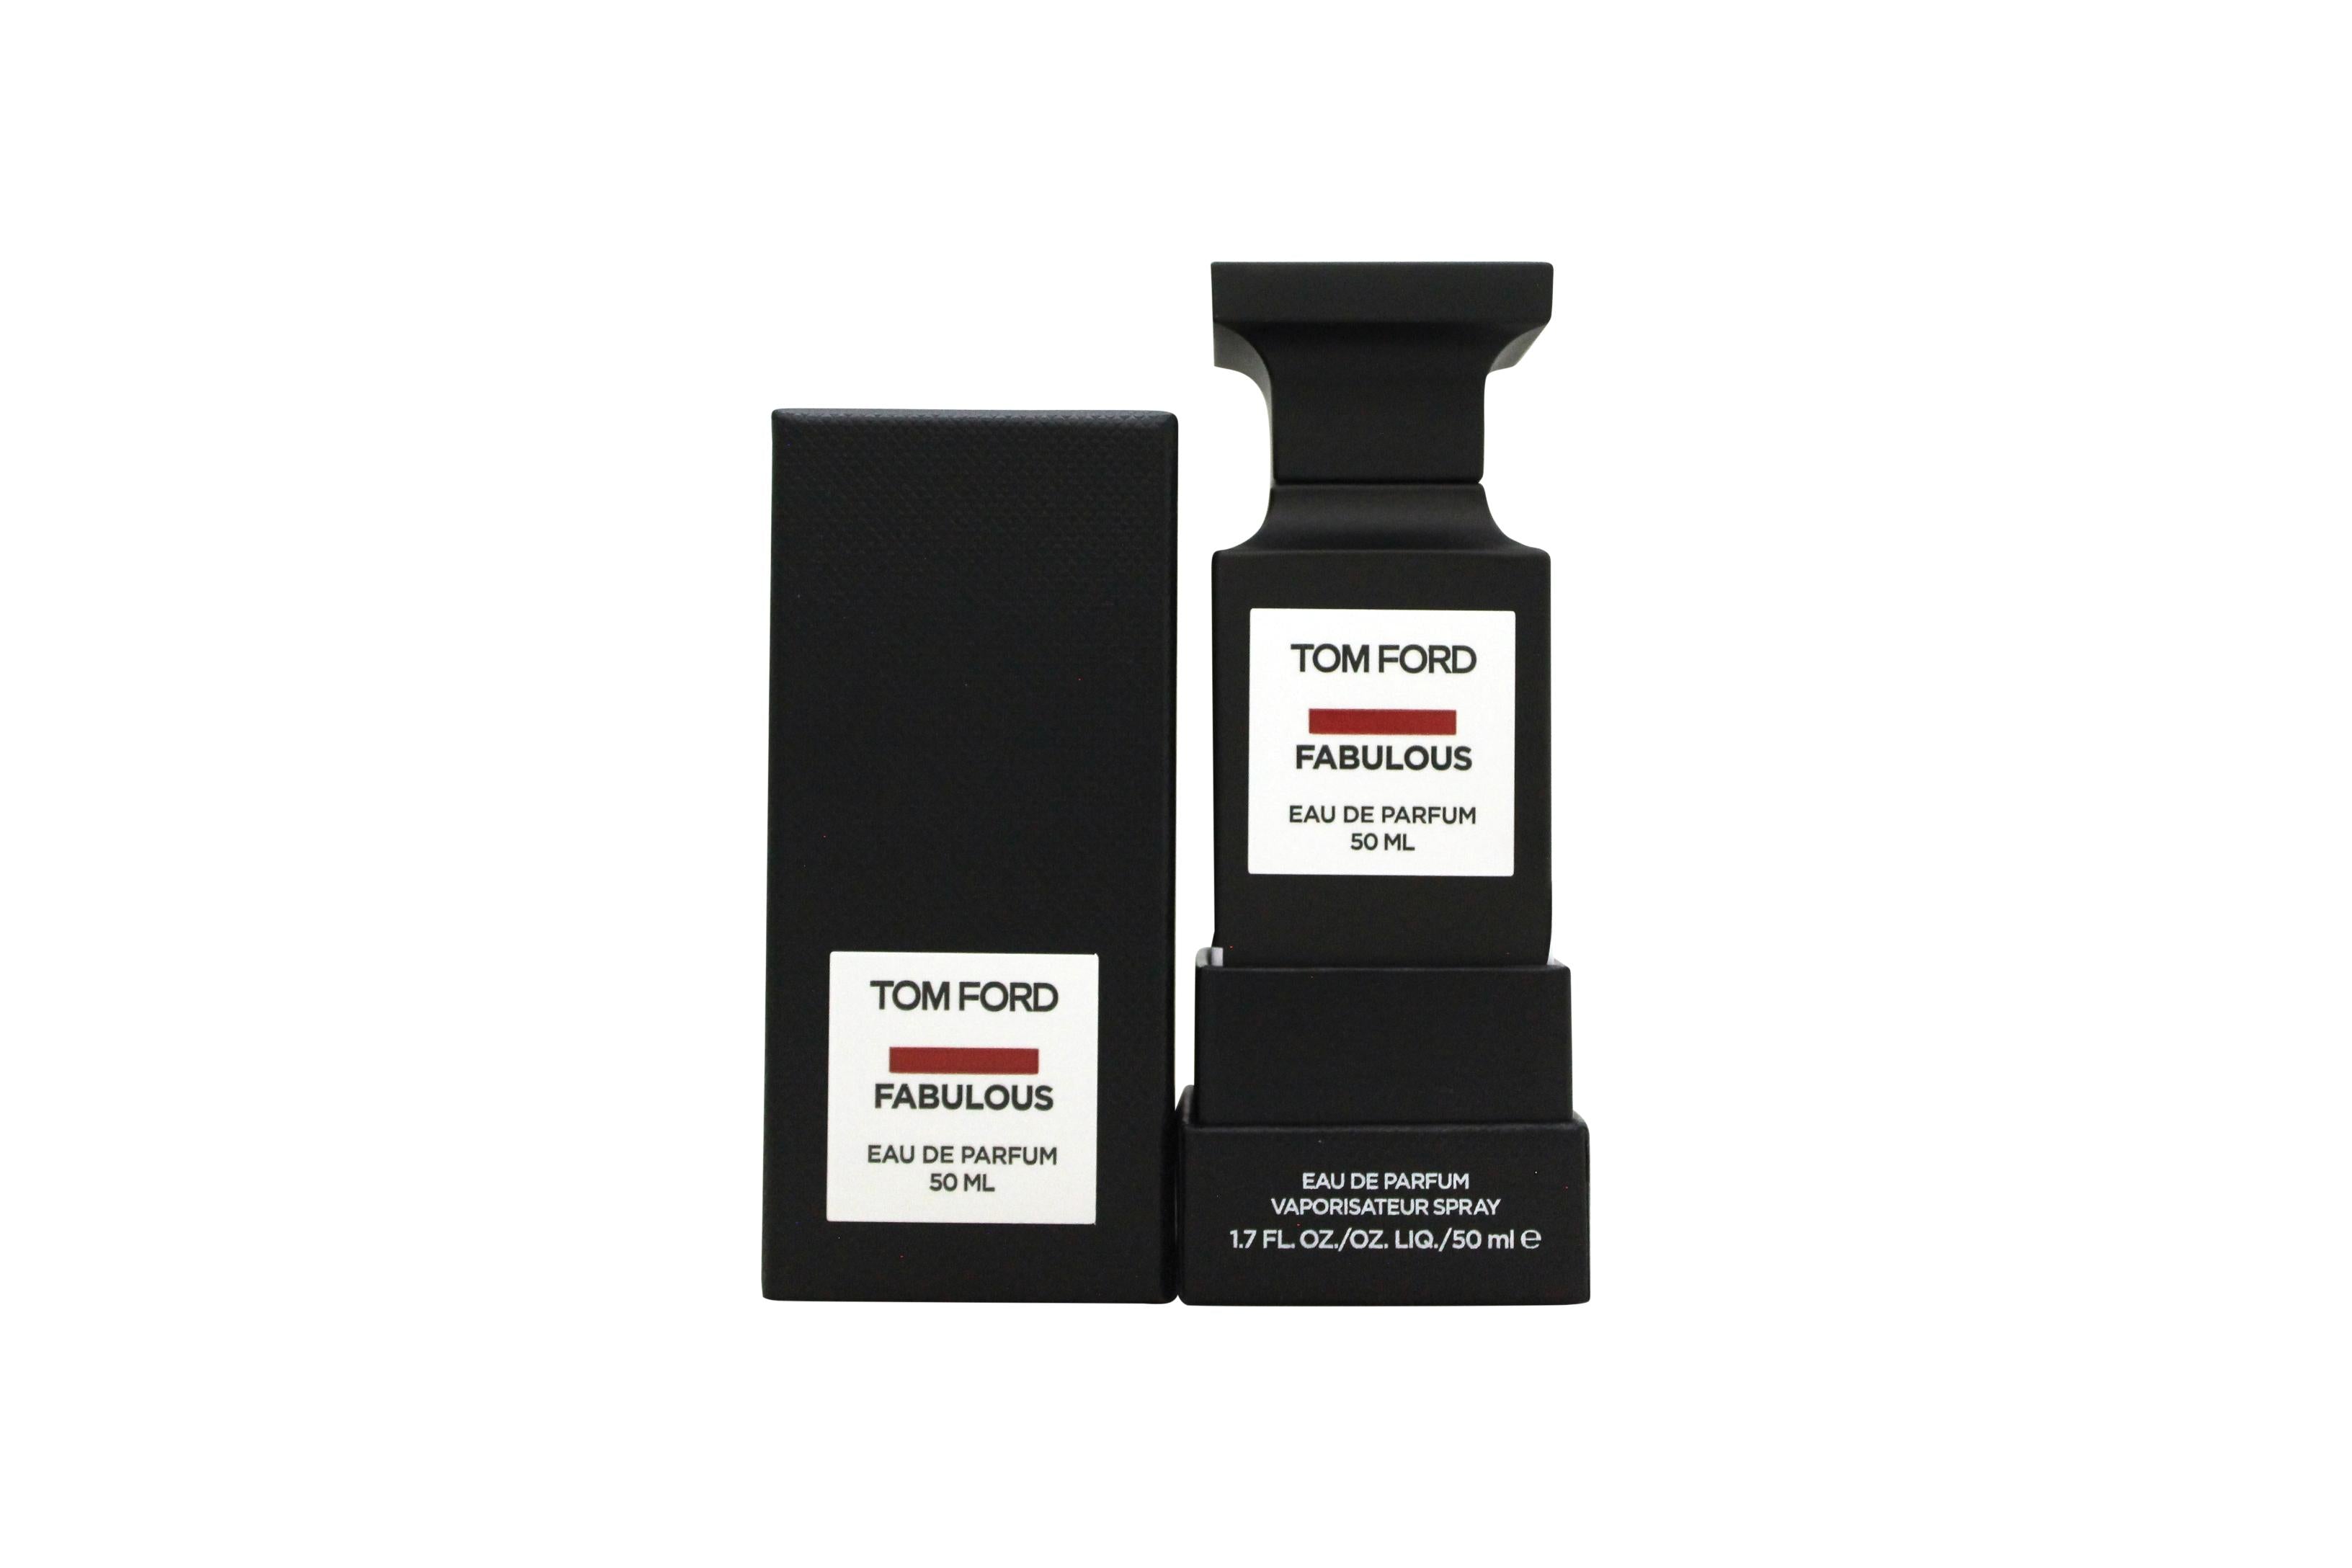 View Tom Ford F Fabulous Eau de Parfum 50ml Spray information